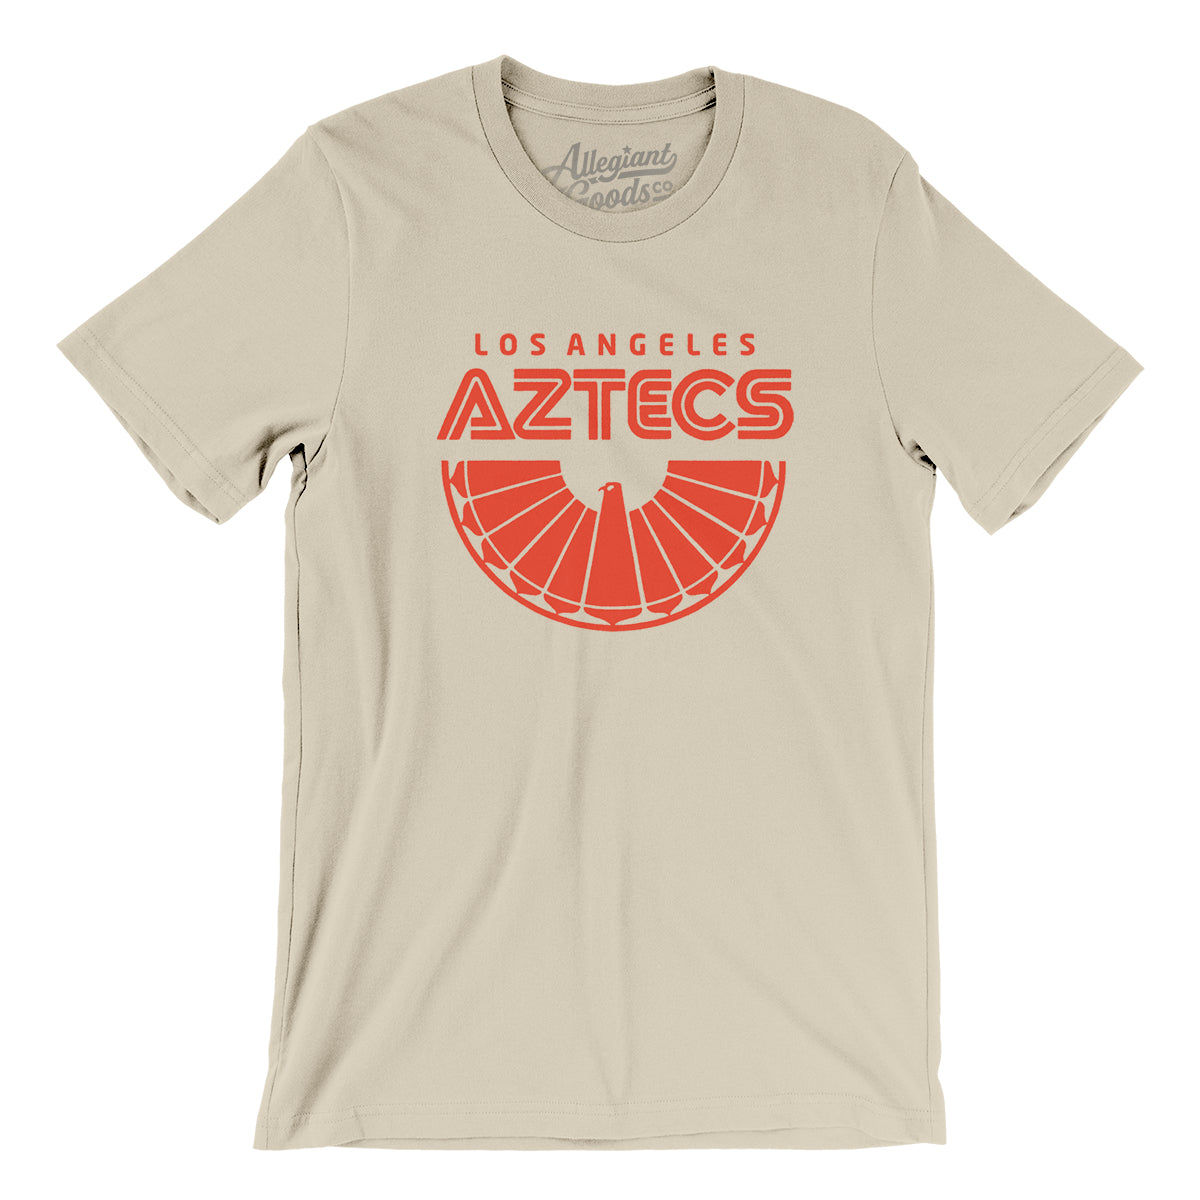 L.A. Aztecs | Vintage Soccer Apparel | Old School Shirts